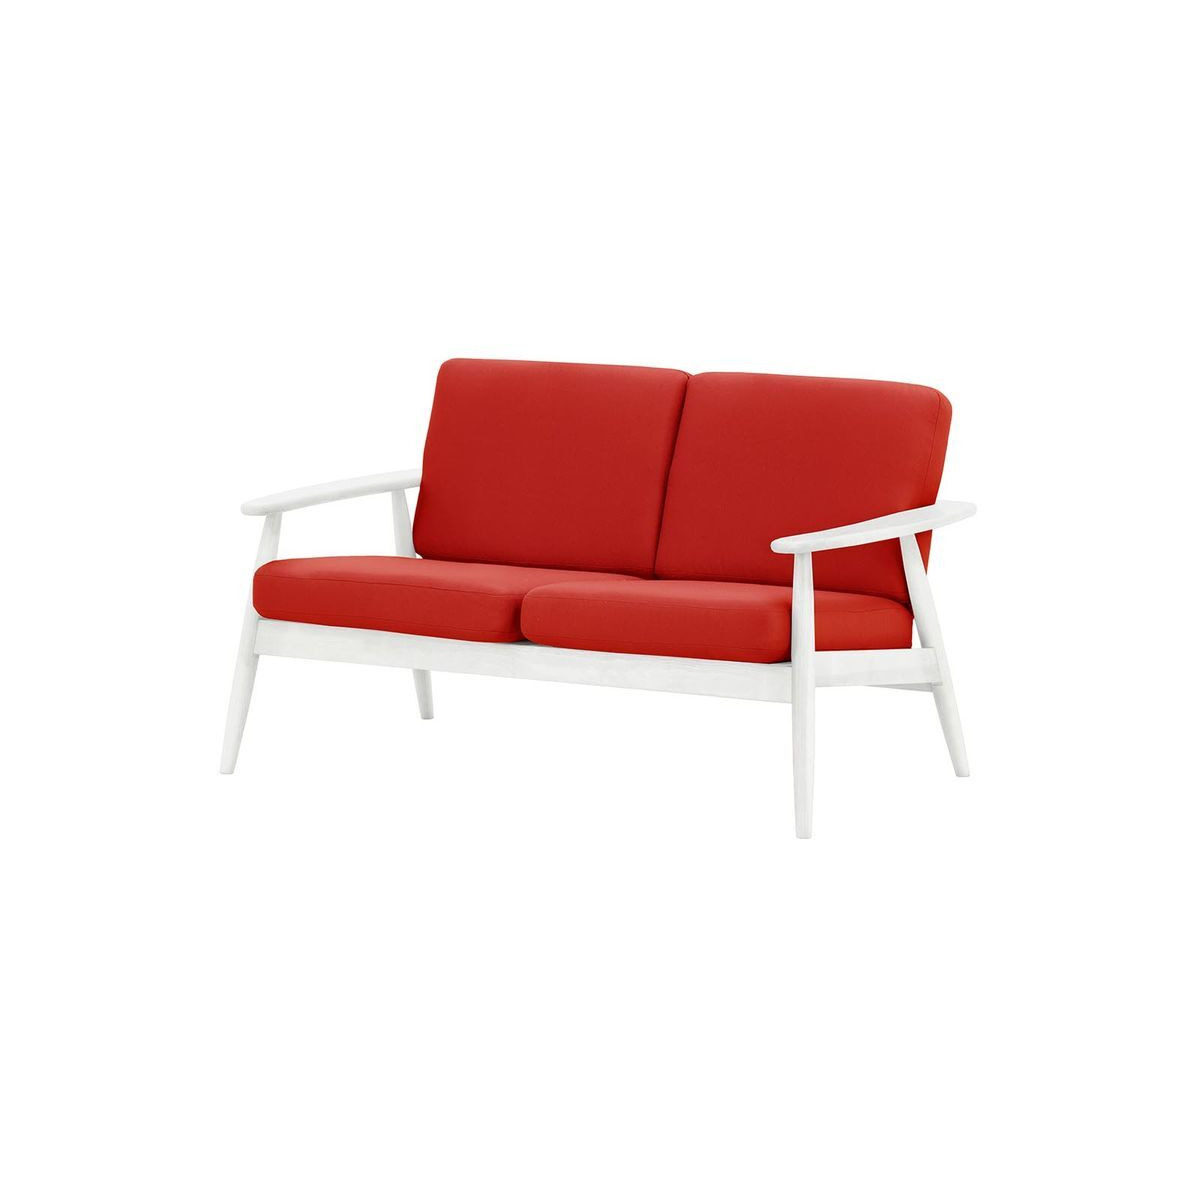 Demure Aqua 2 Seater Garden Sofa, red, Leg colour: 8035 white - image 1